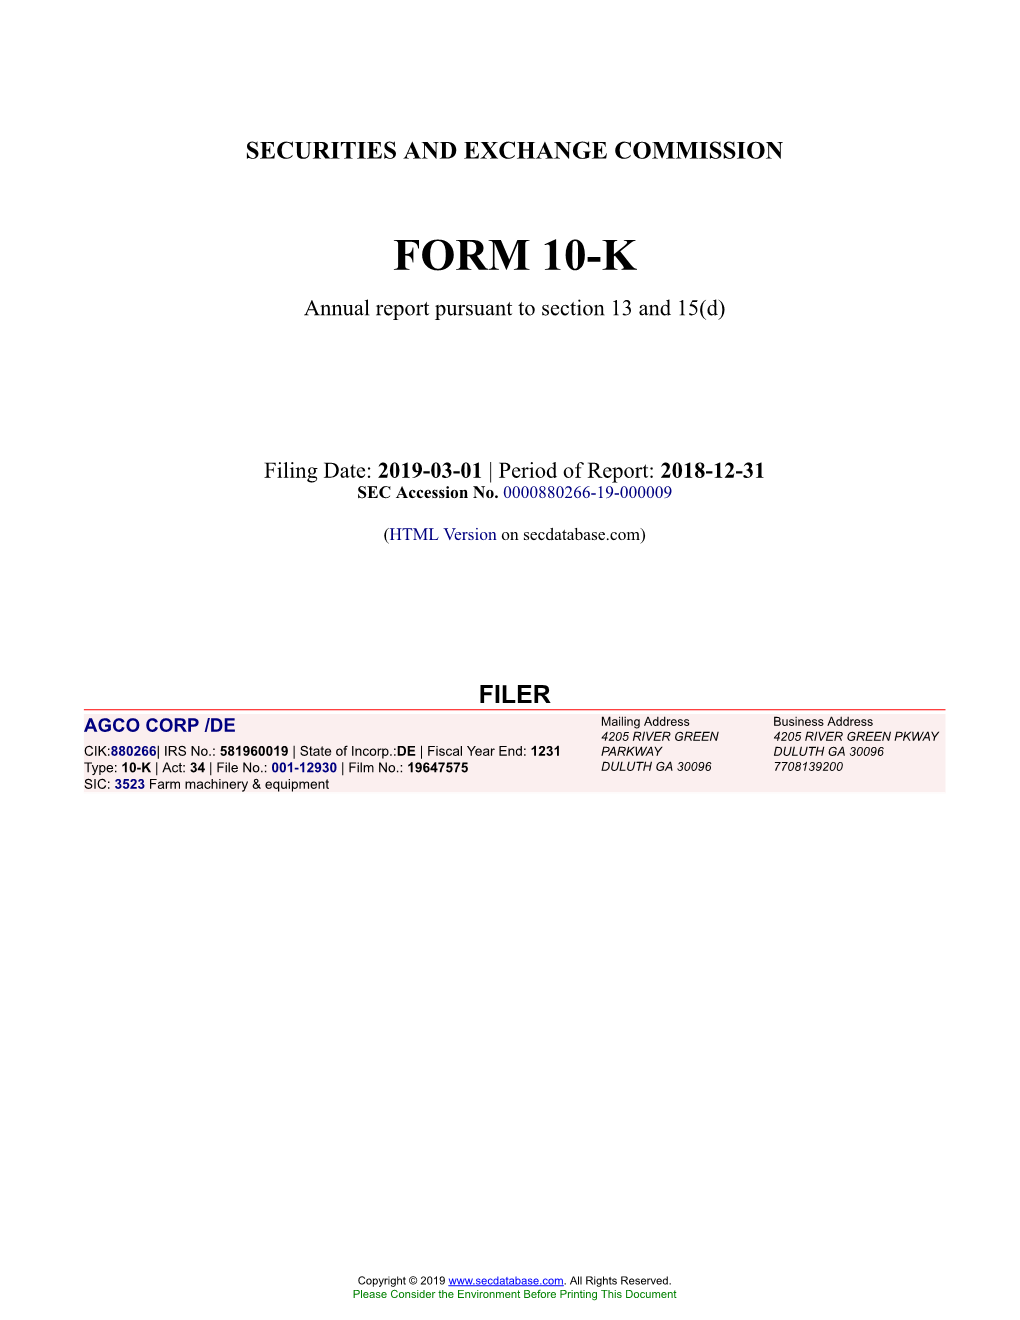 AGCO CORP /DE Form 10-K Annual Report Filed 2019-03-01